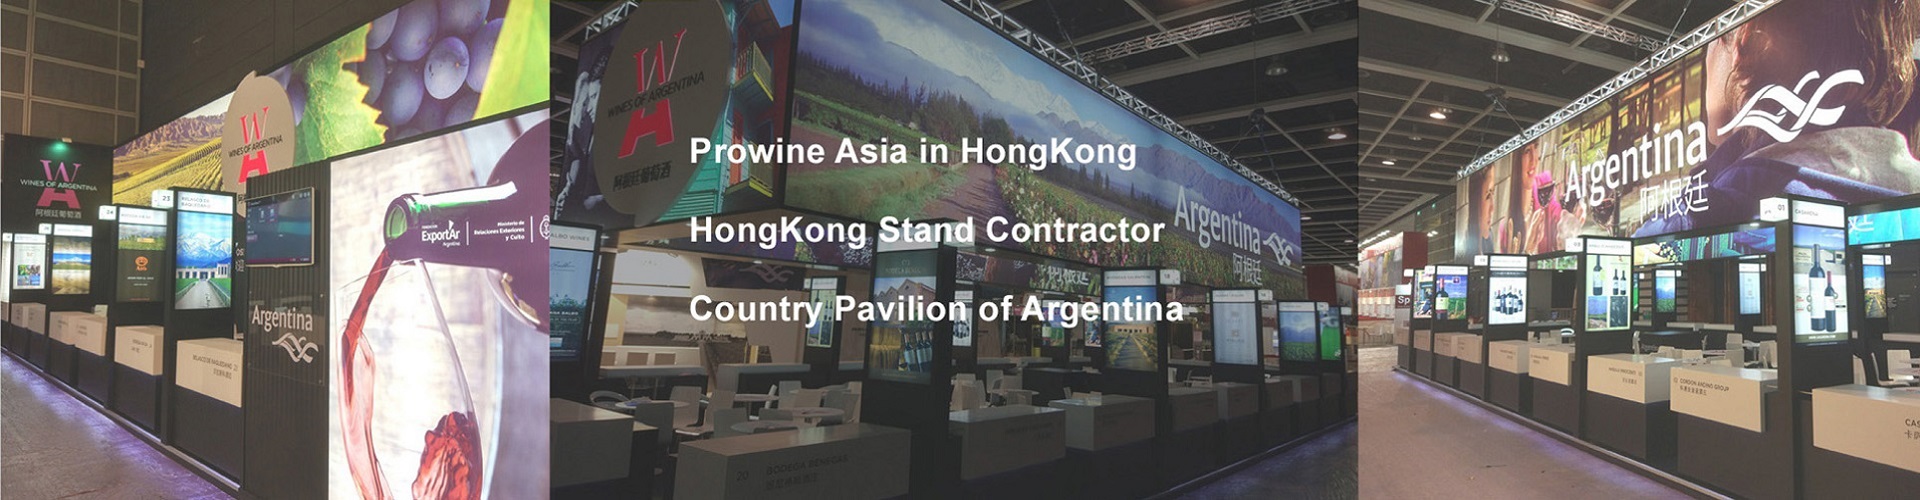 Prowine Asia/Hongkong stand builder